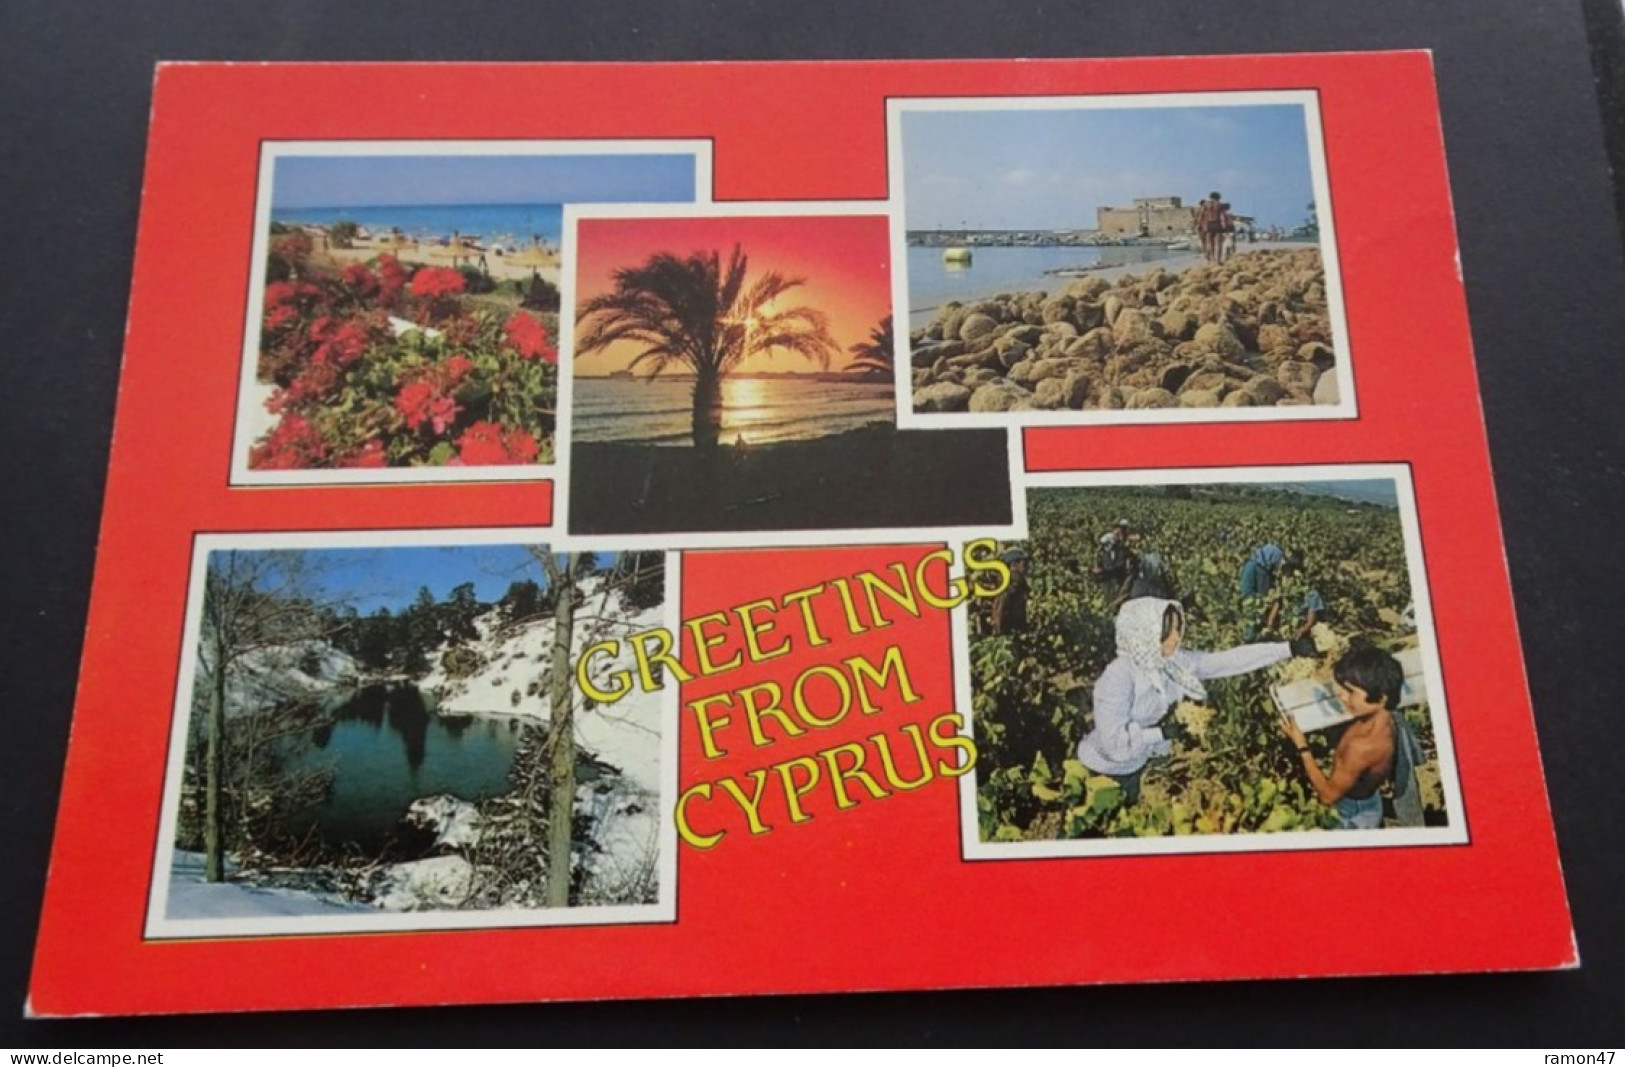 Greetings From Cyprus - N.G. Triarchos & Co., Nicosia - # 495 - Cyprus